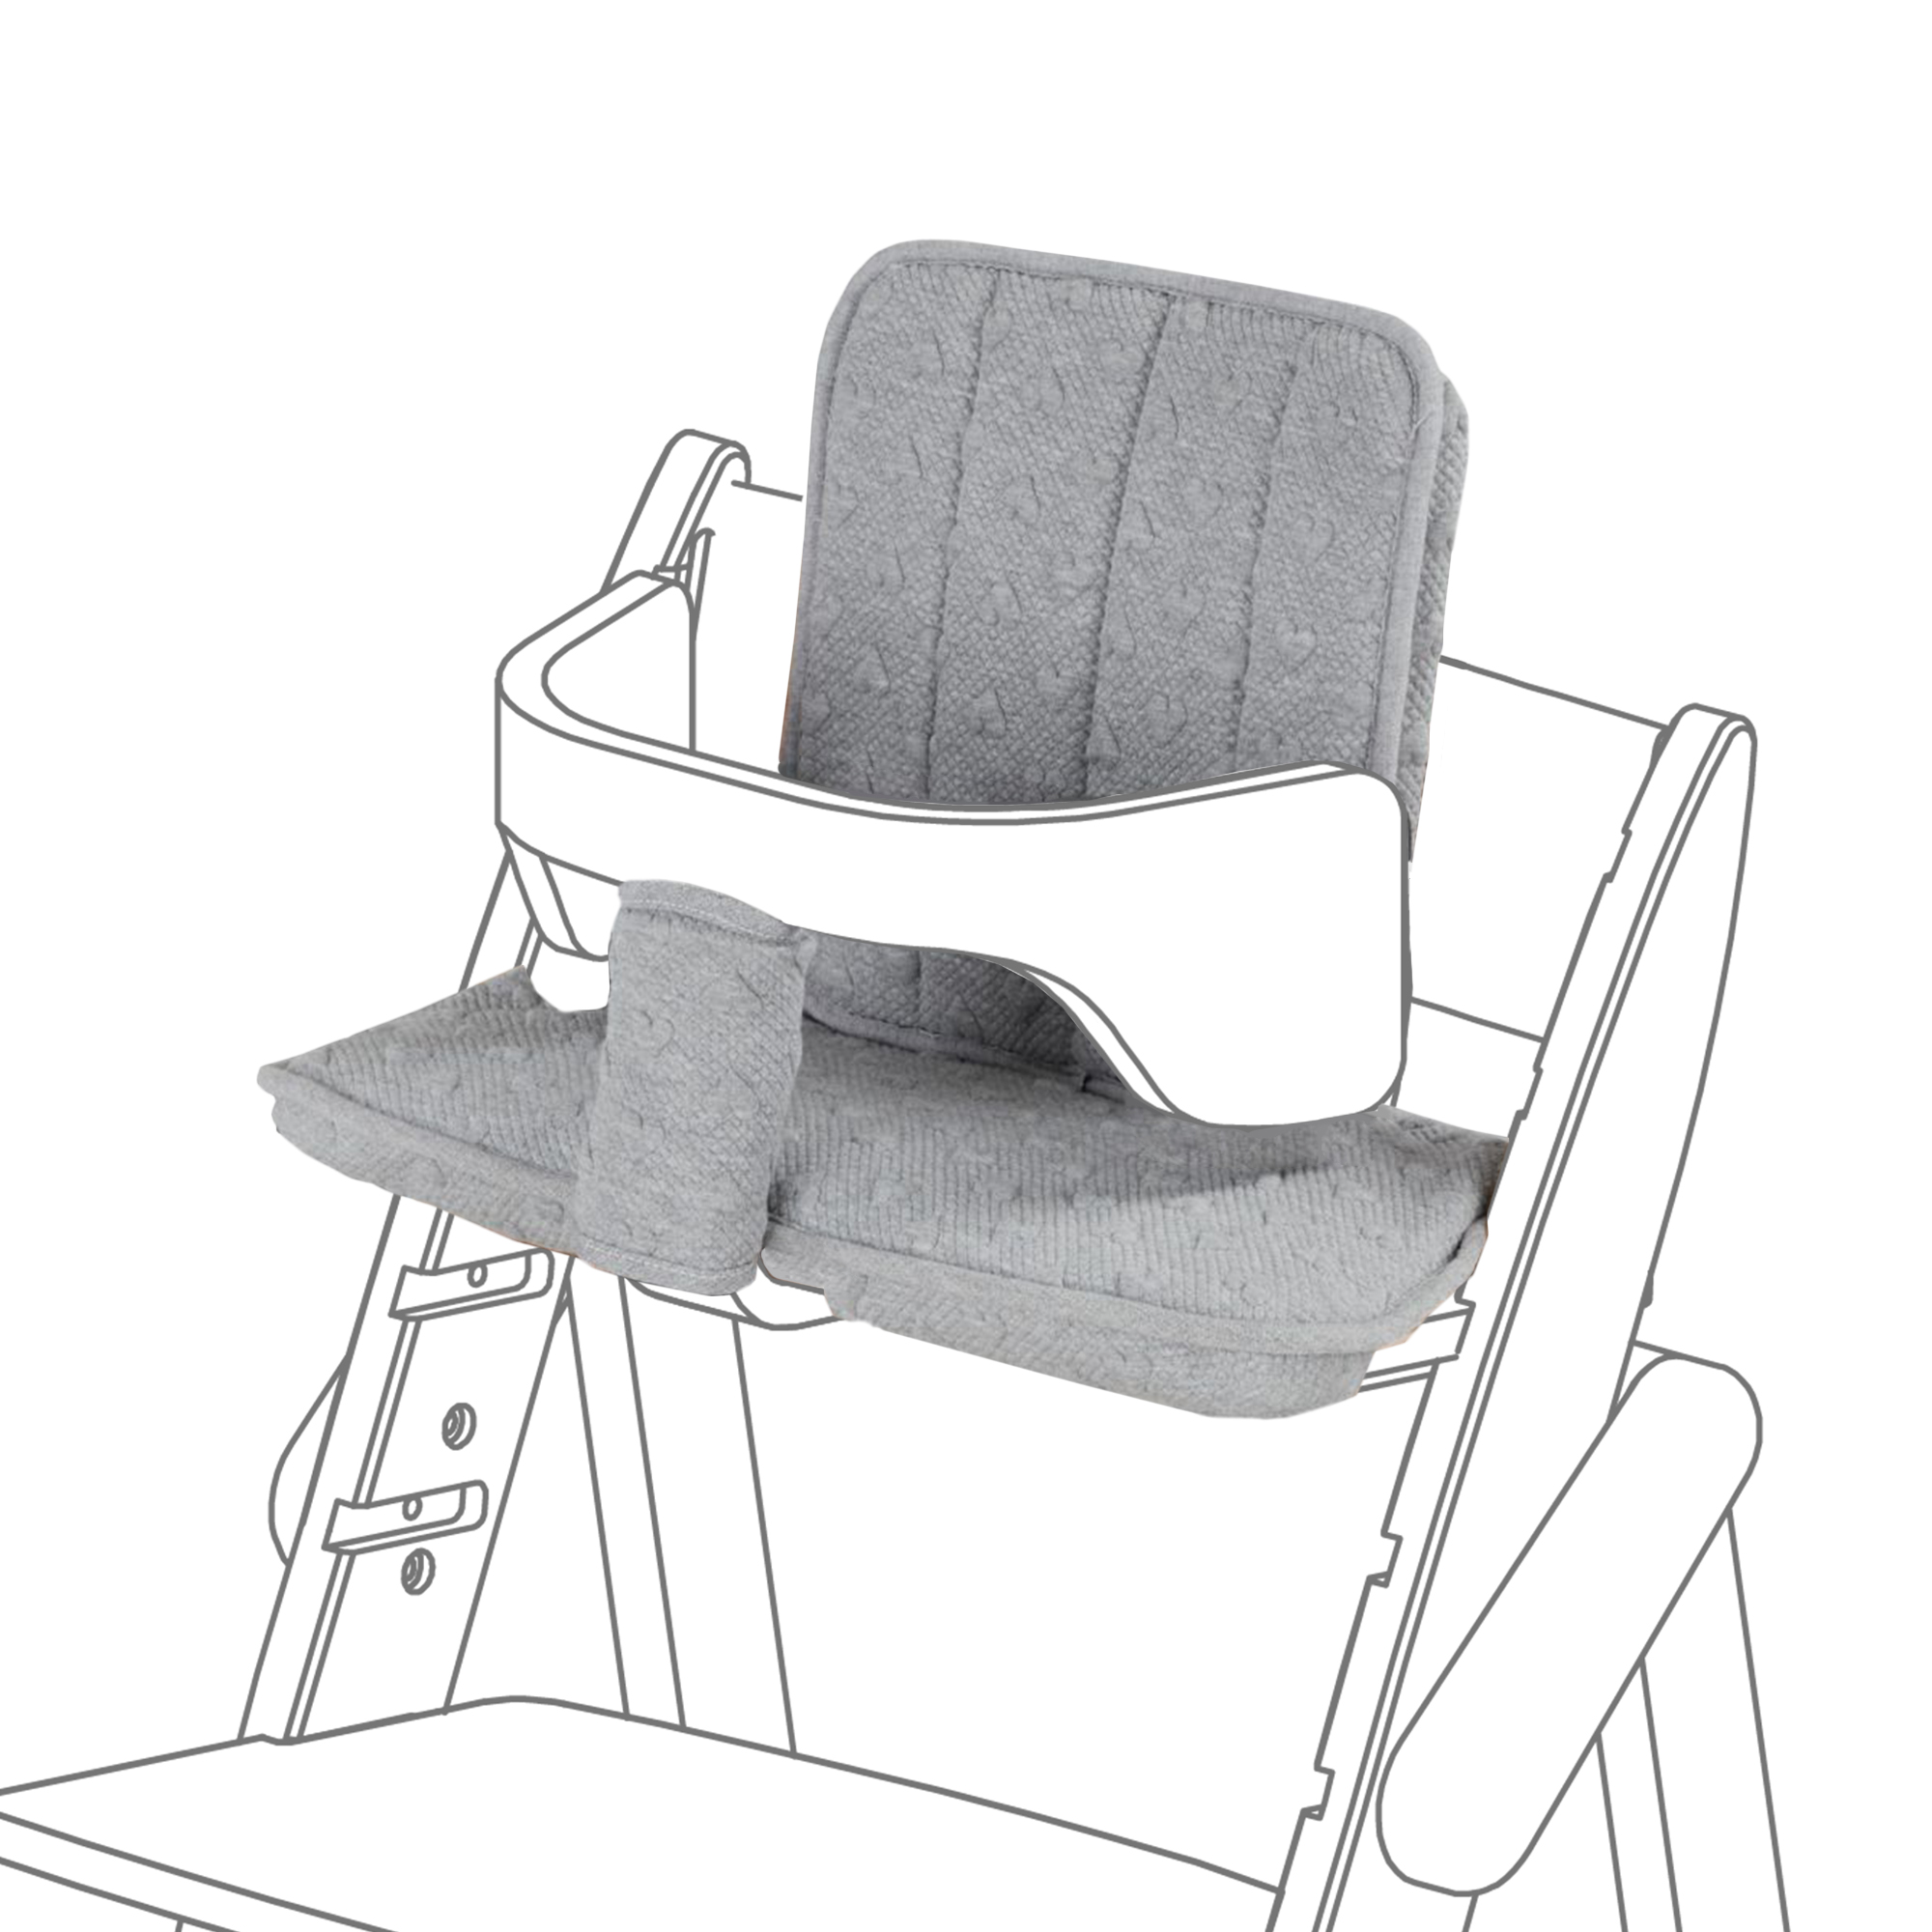 Набор подушек Moji Cushion Set для стульчика Yippy heart 12003342016 столешница moji food tray для крепления на стульчик yippy cloud 12003321601